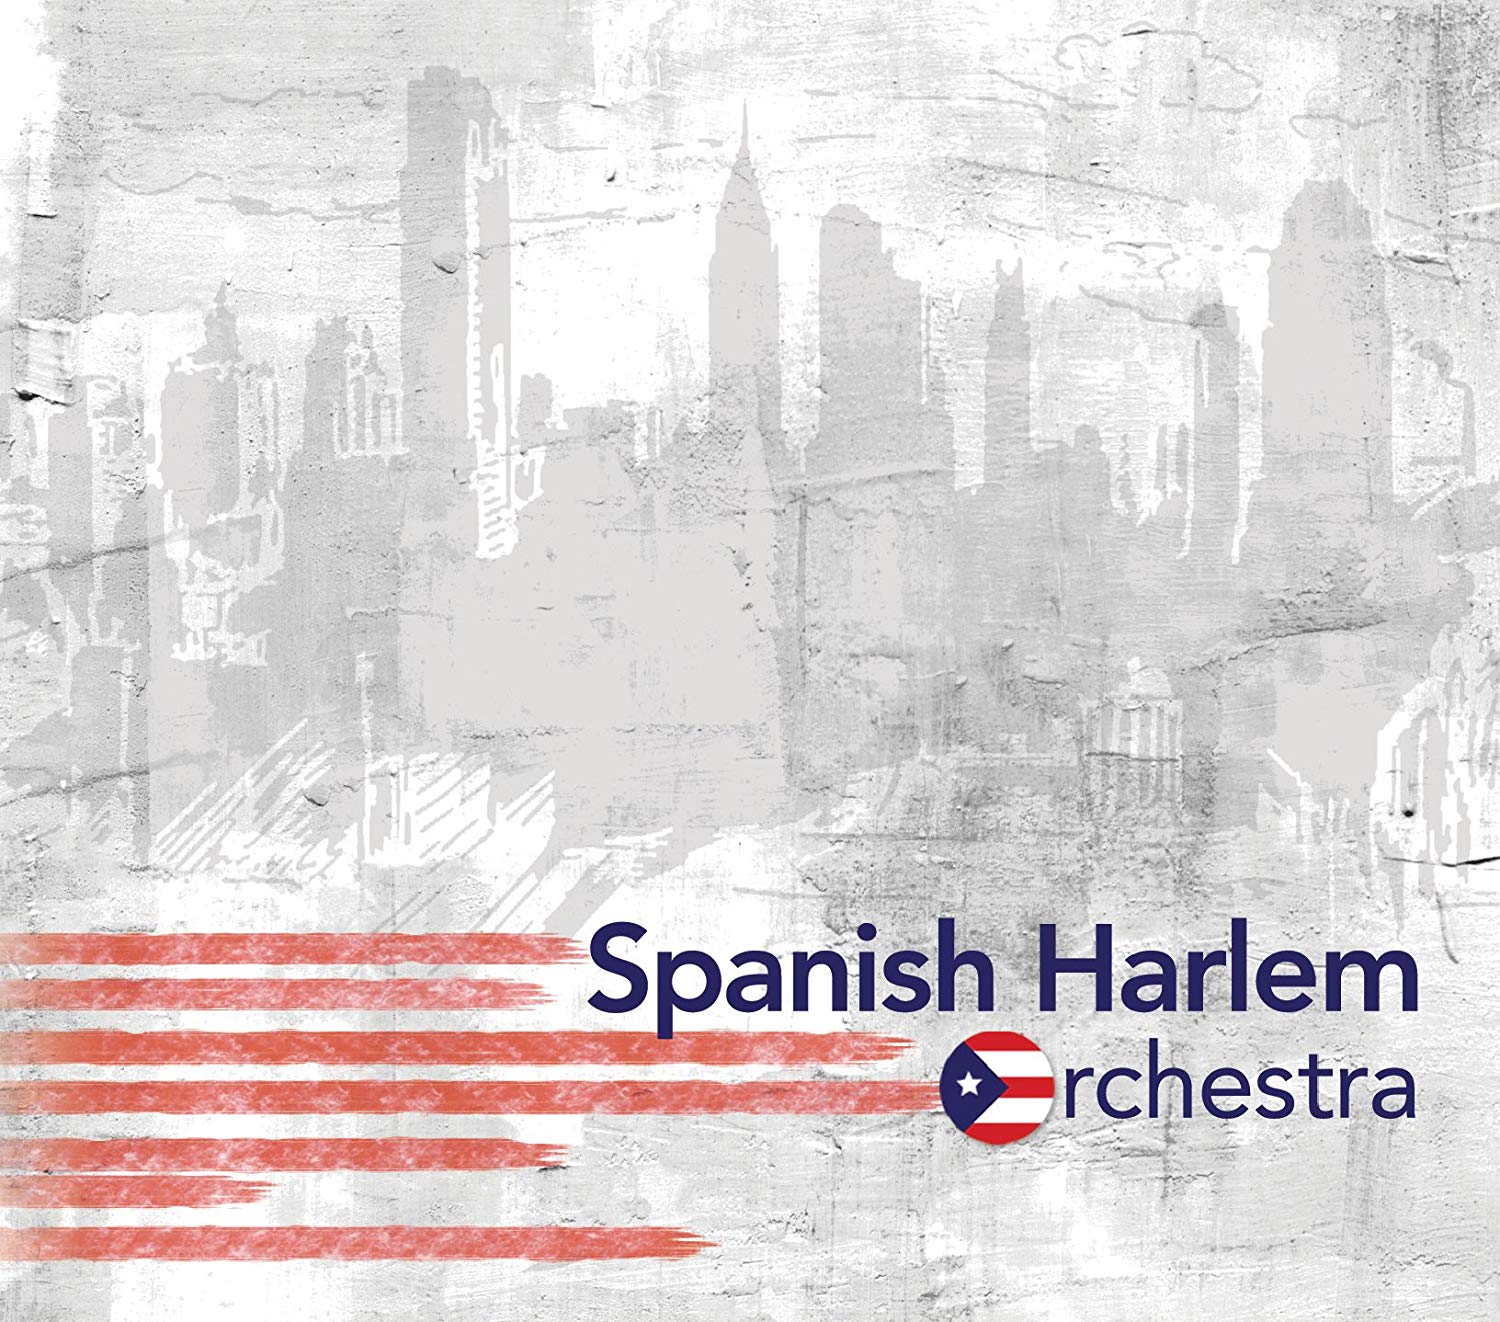 SPANISH HARLEM ORCHESTRA / スパニッシュ・ハーレム・オーケストラ / SPANISH HARLEM ORCHESTRA